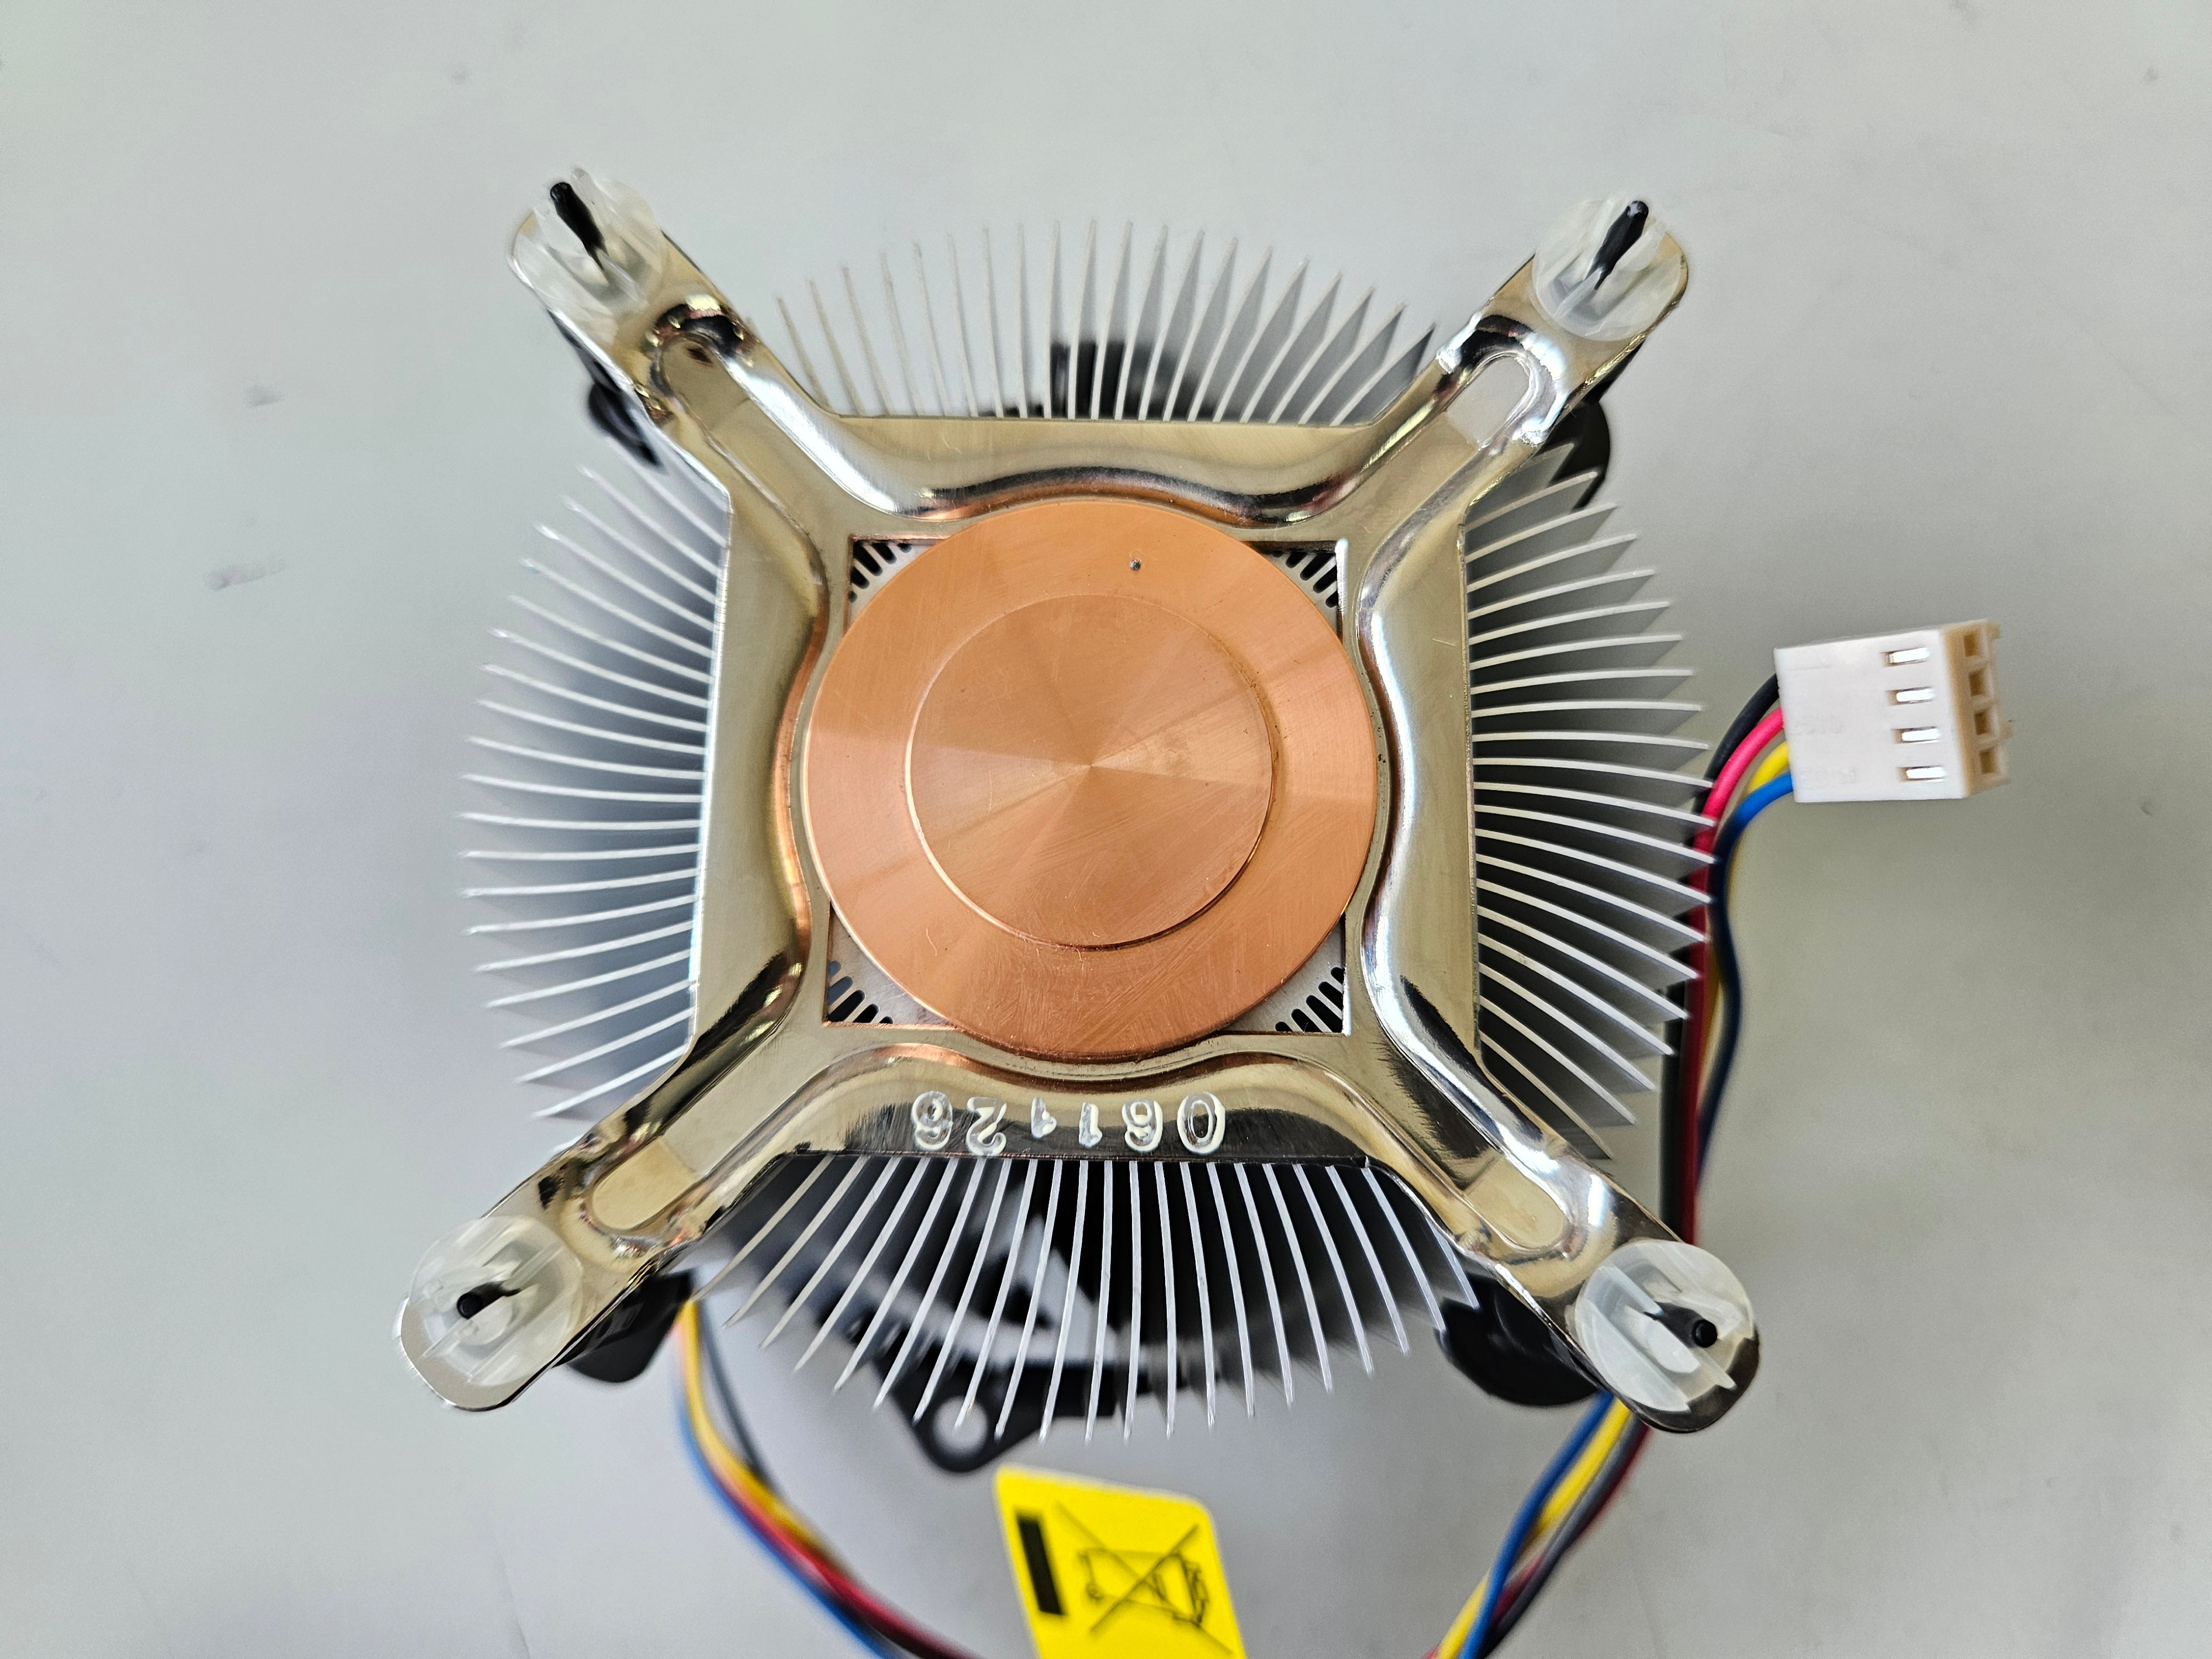 Cooler Master CM12V CPU Cooler Fan For Intel LGA775 Dual Core 4200rpm ( CI5-9IDPA-I1-GP ) USED